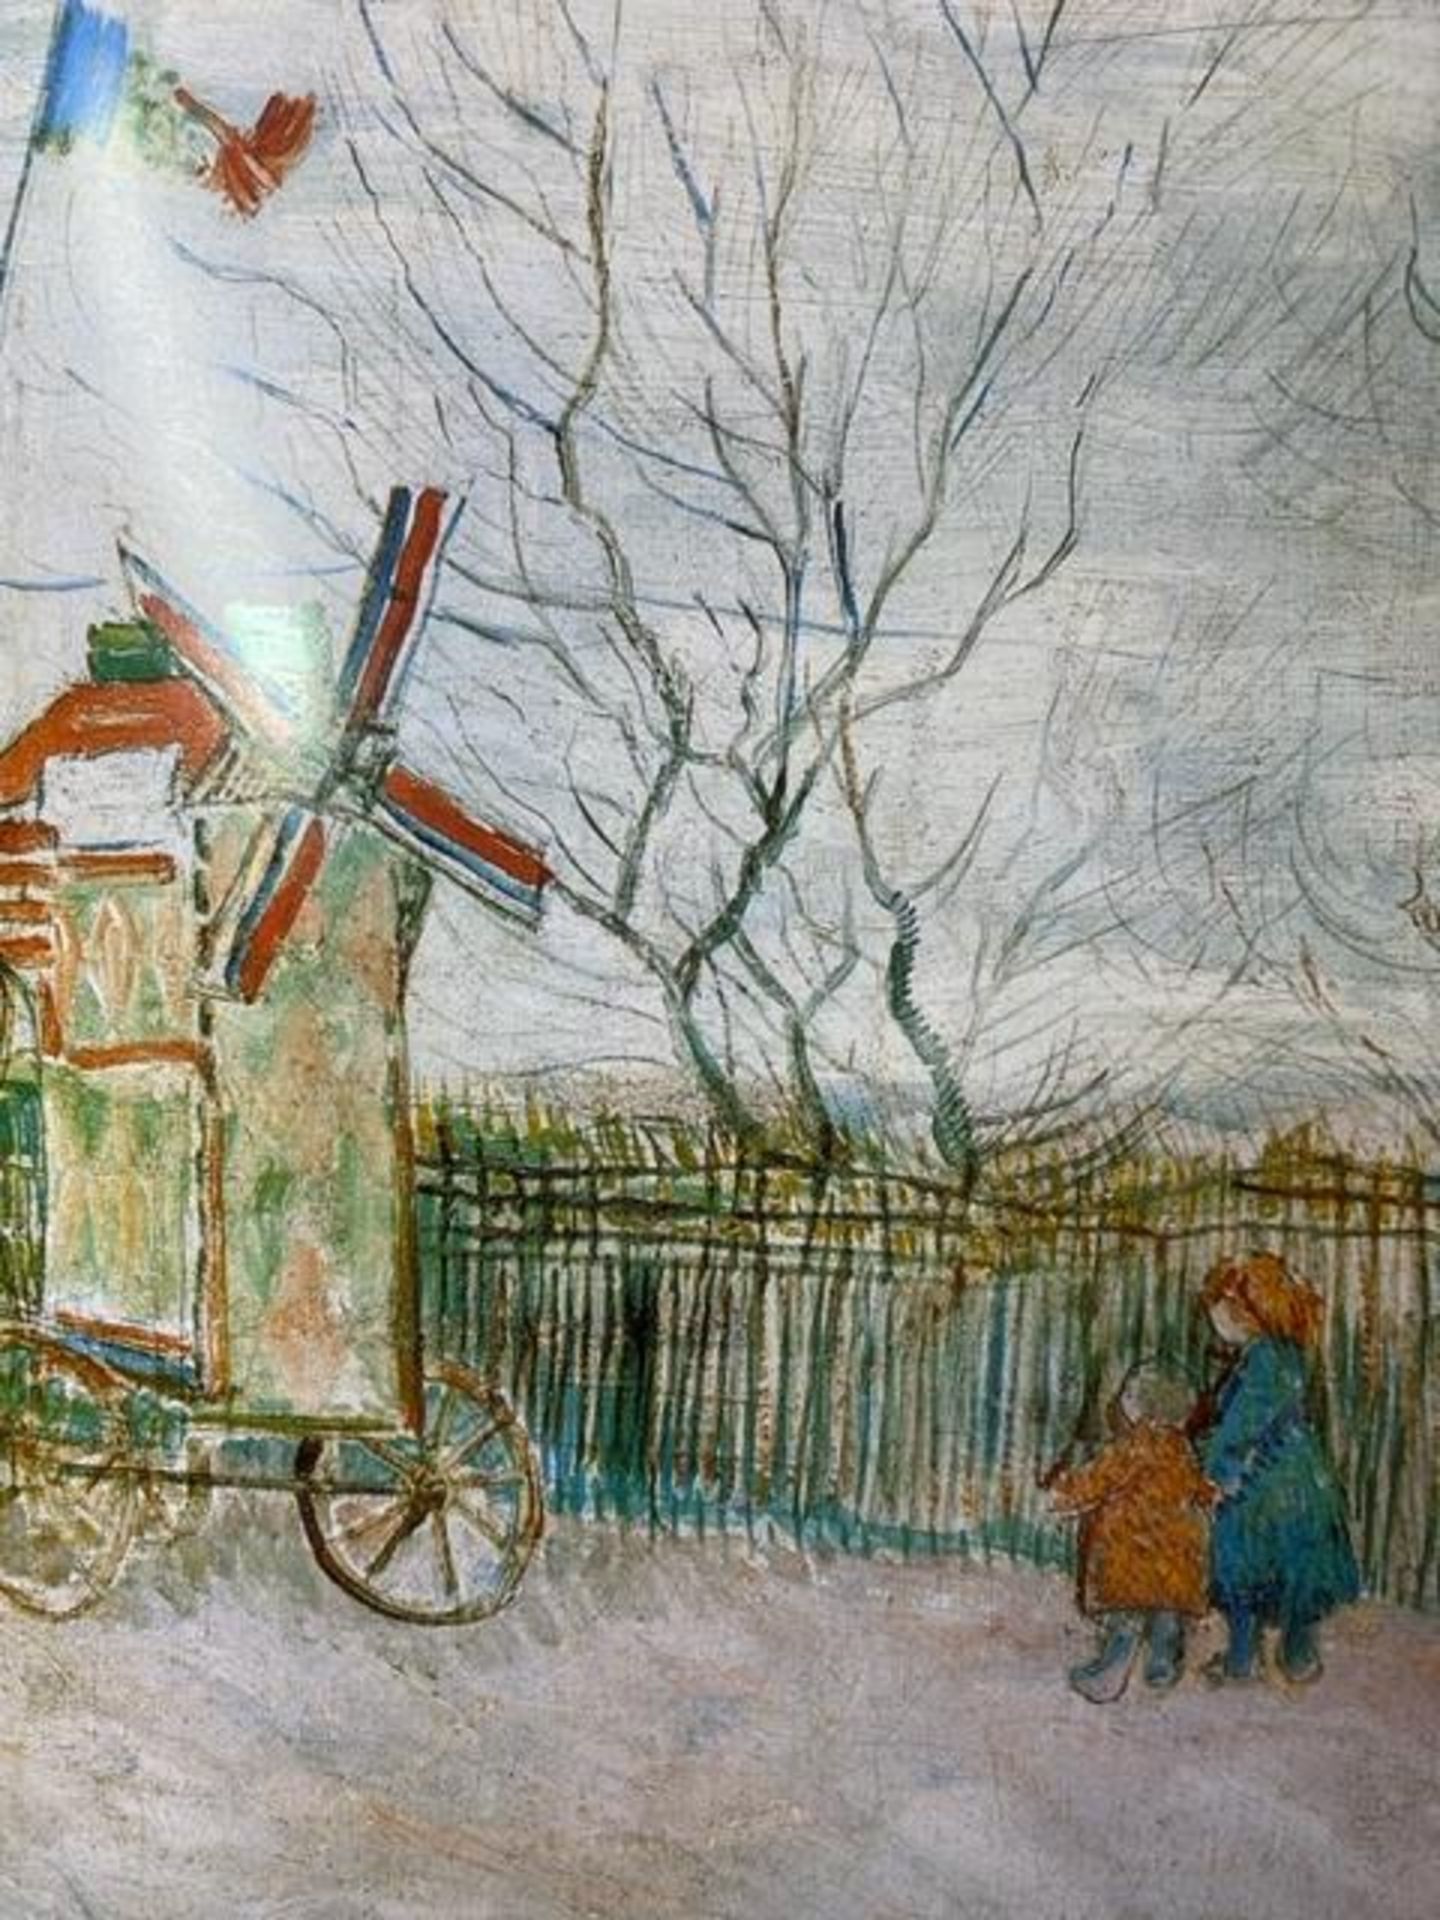 Vincent van Gogh "Street Scene" Print. - Image 3 of 6